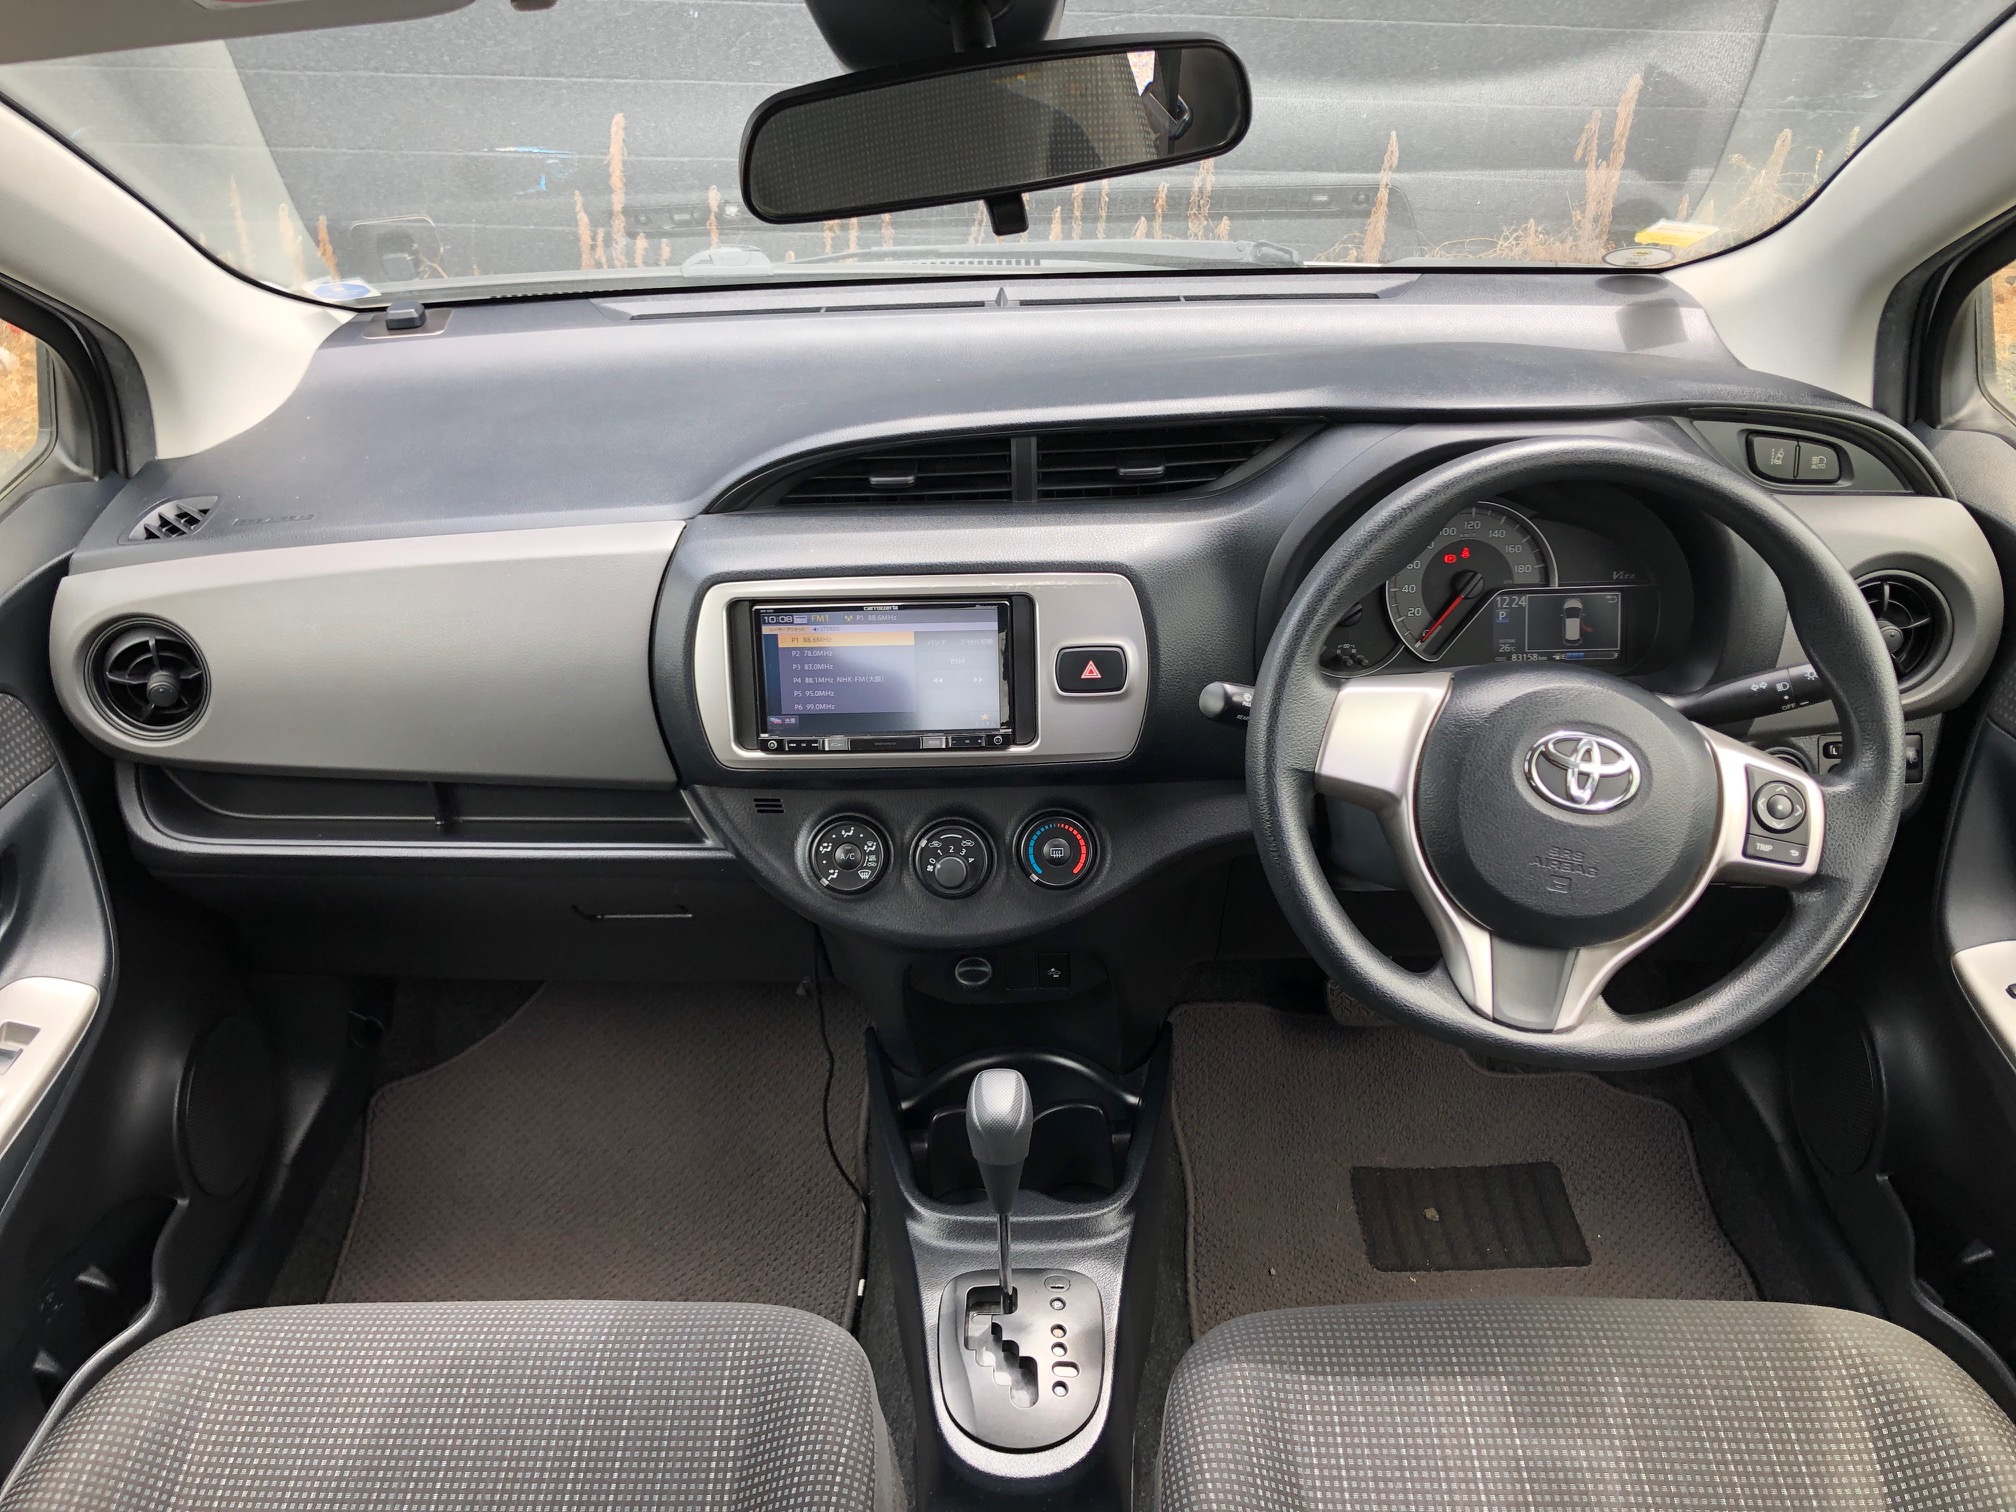 Toyota Vitz 2015 Image 11